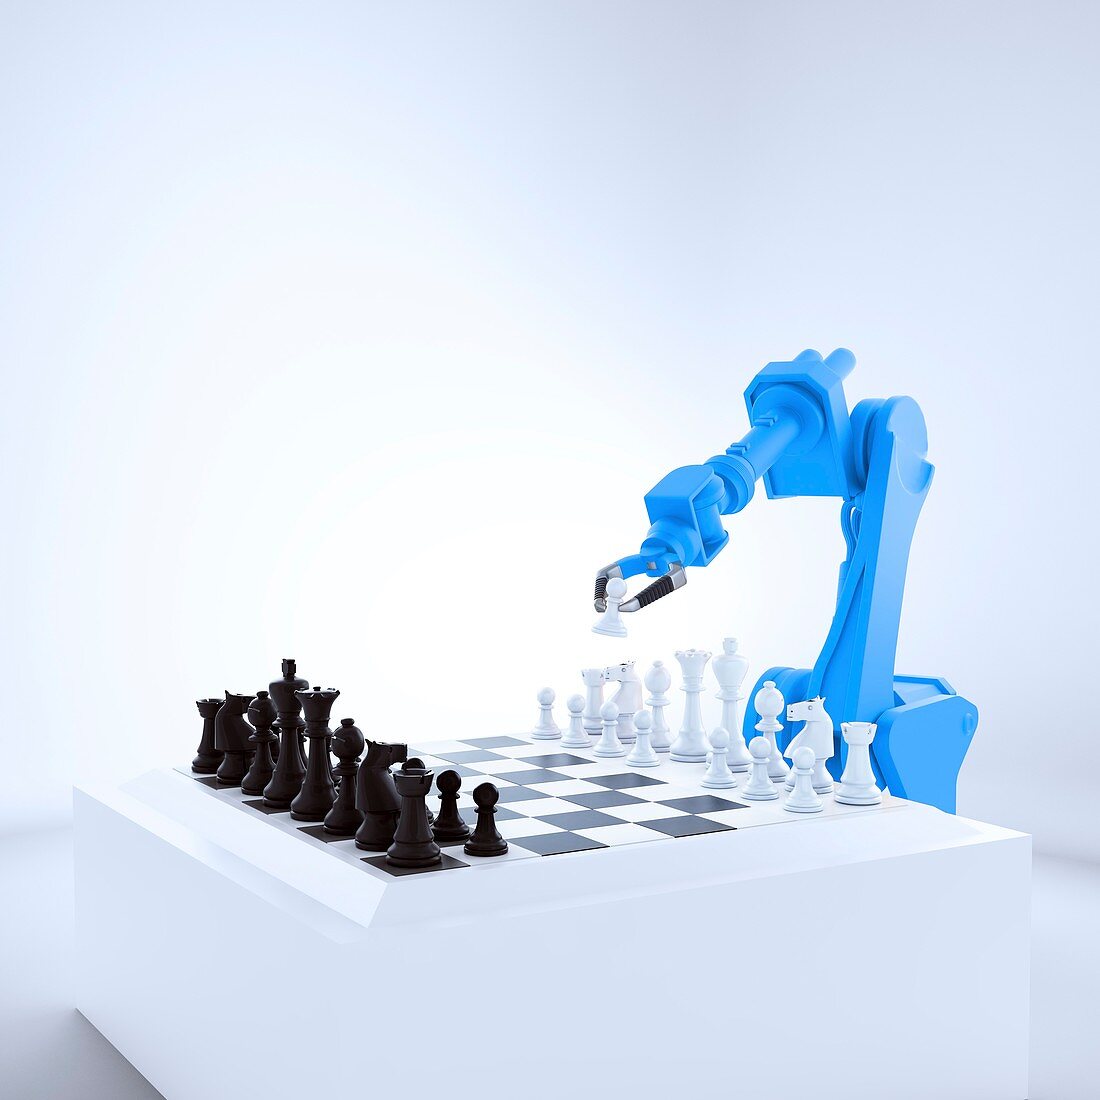 Robotic arm playing chess,artwork